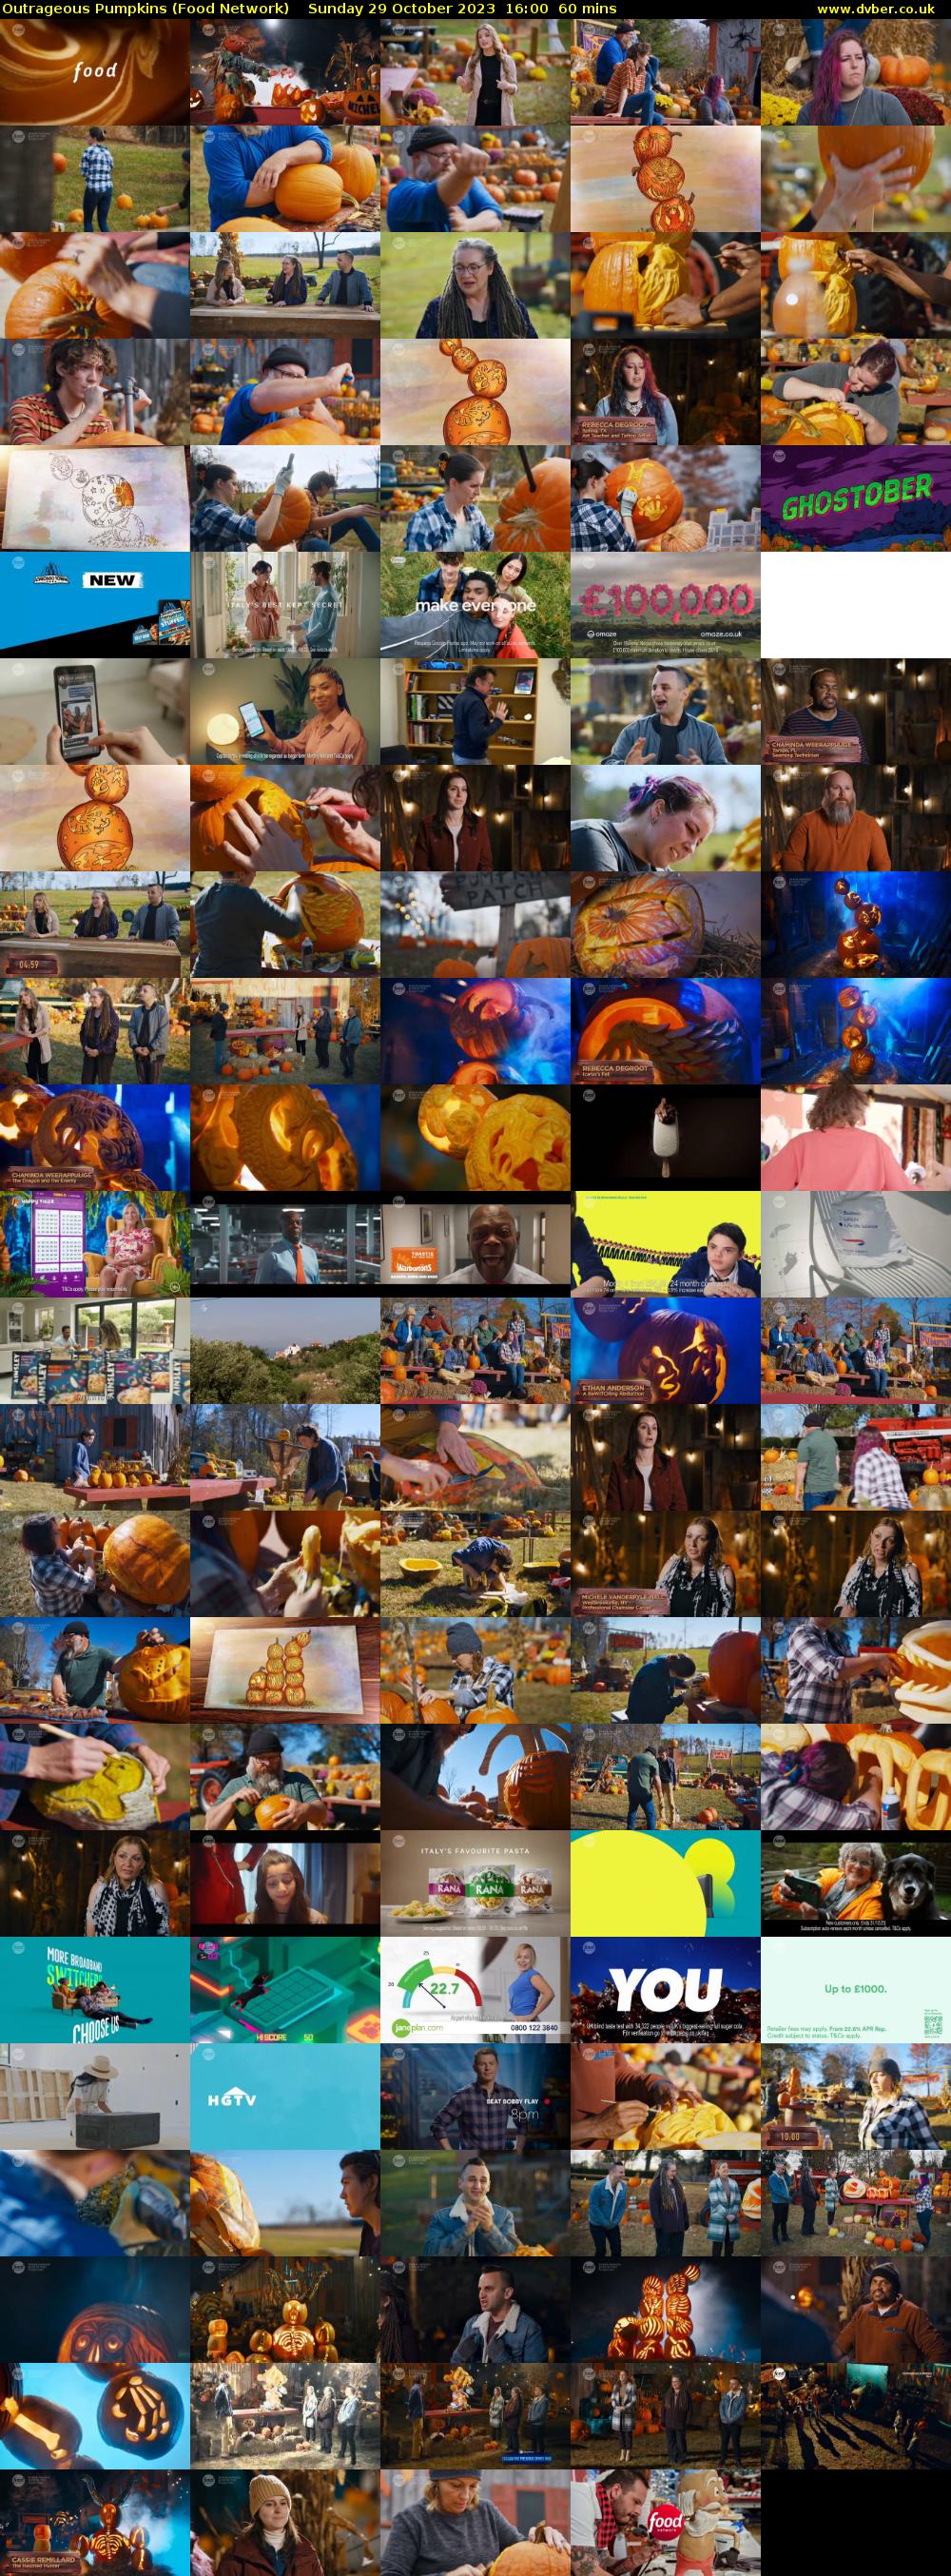 Outrageous Pumpkins (Food Network) Sunday 29 October 2023 16:00 - 17:00